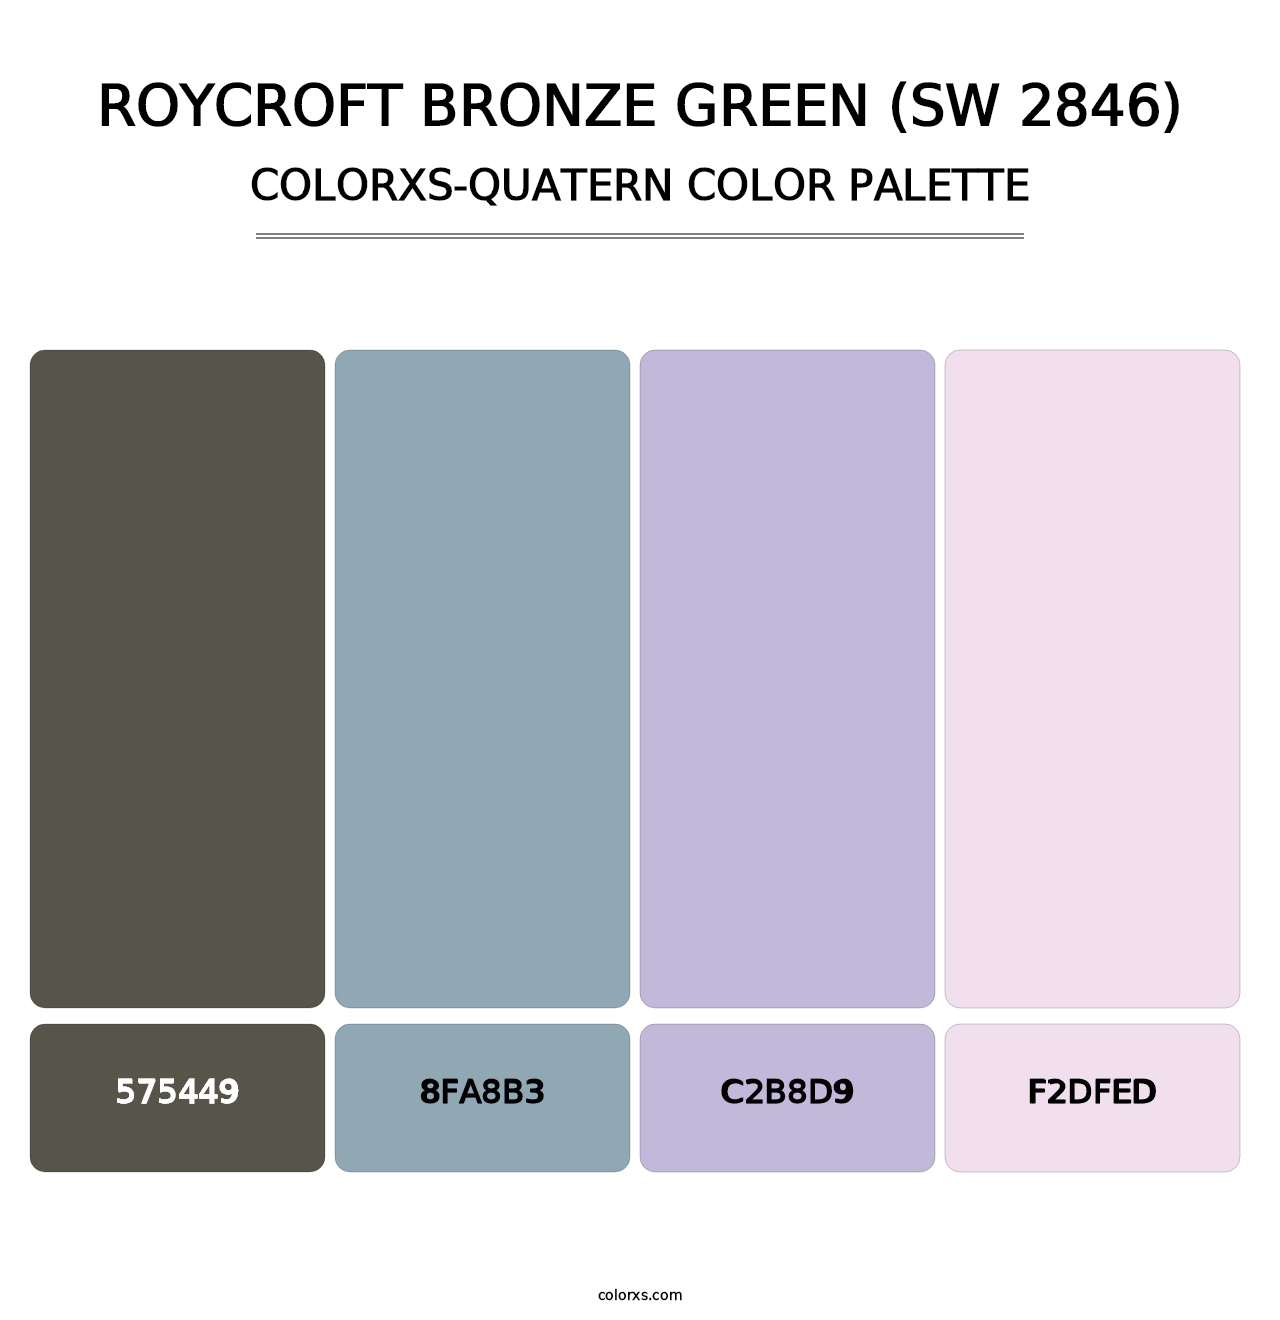 Roycroft Bronze Green (SW 2846) - Colorxs Quatern Palette